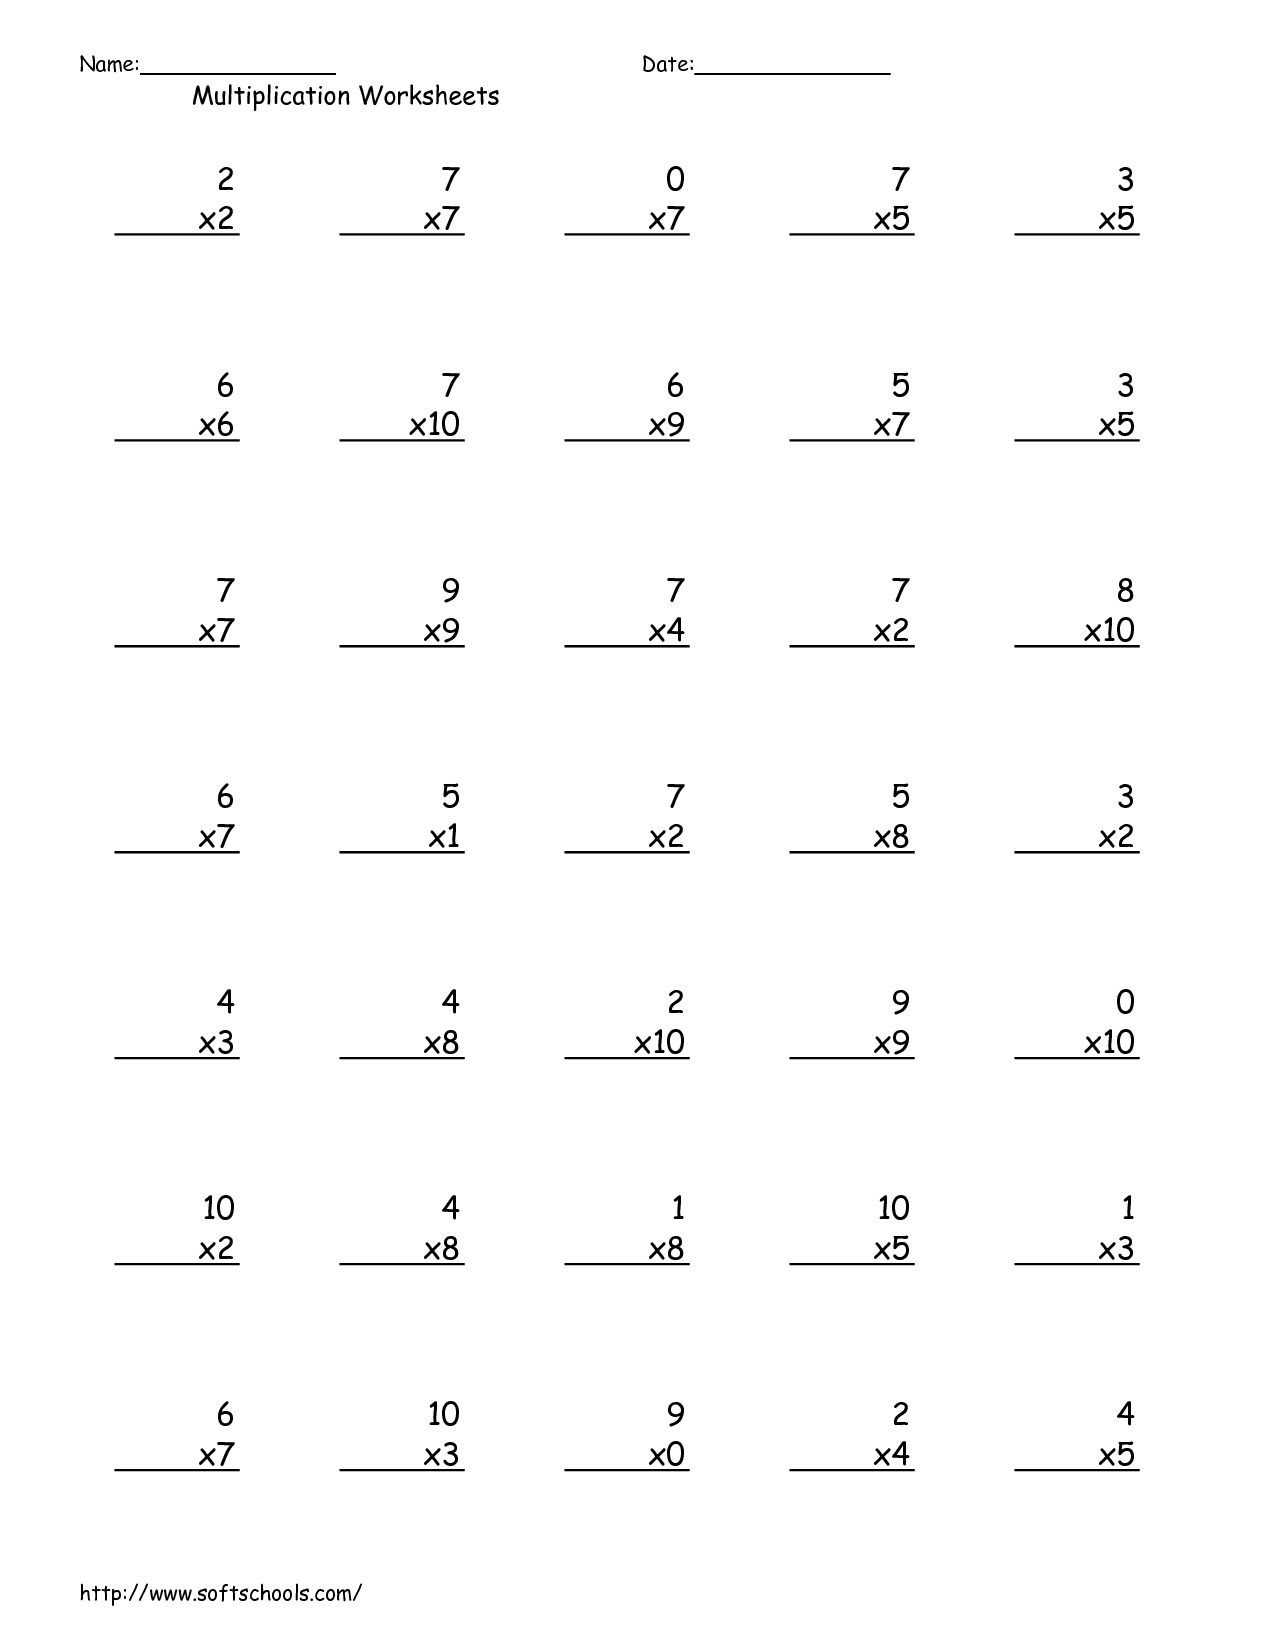 12-best-images-of-multiplication-worksheets-1-11-100-question